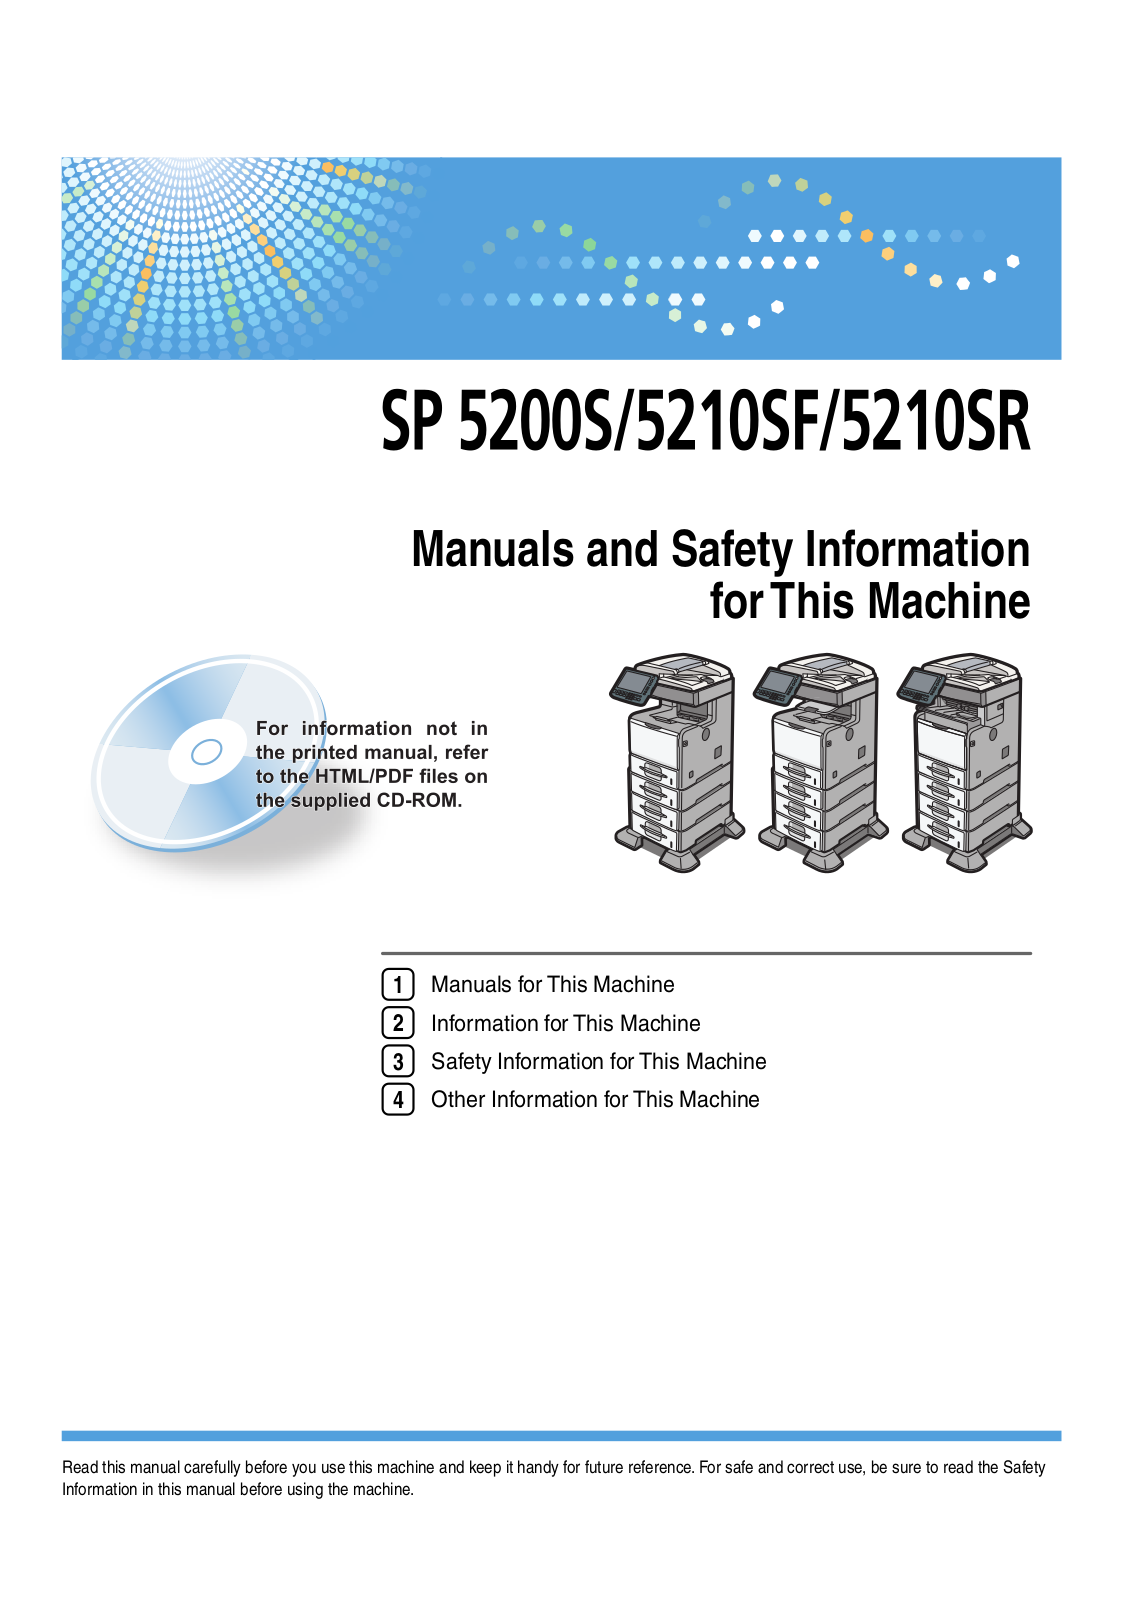 Ricoh SP 5200S, SP 5210SF, SP 5210SR User Manual